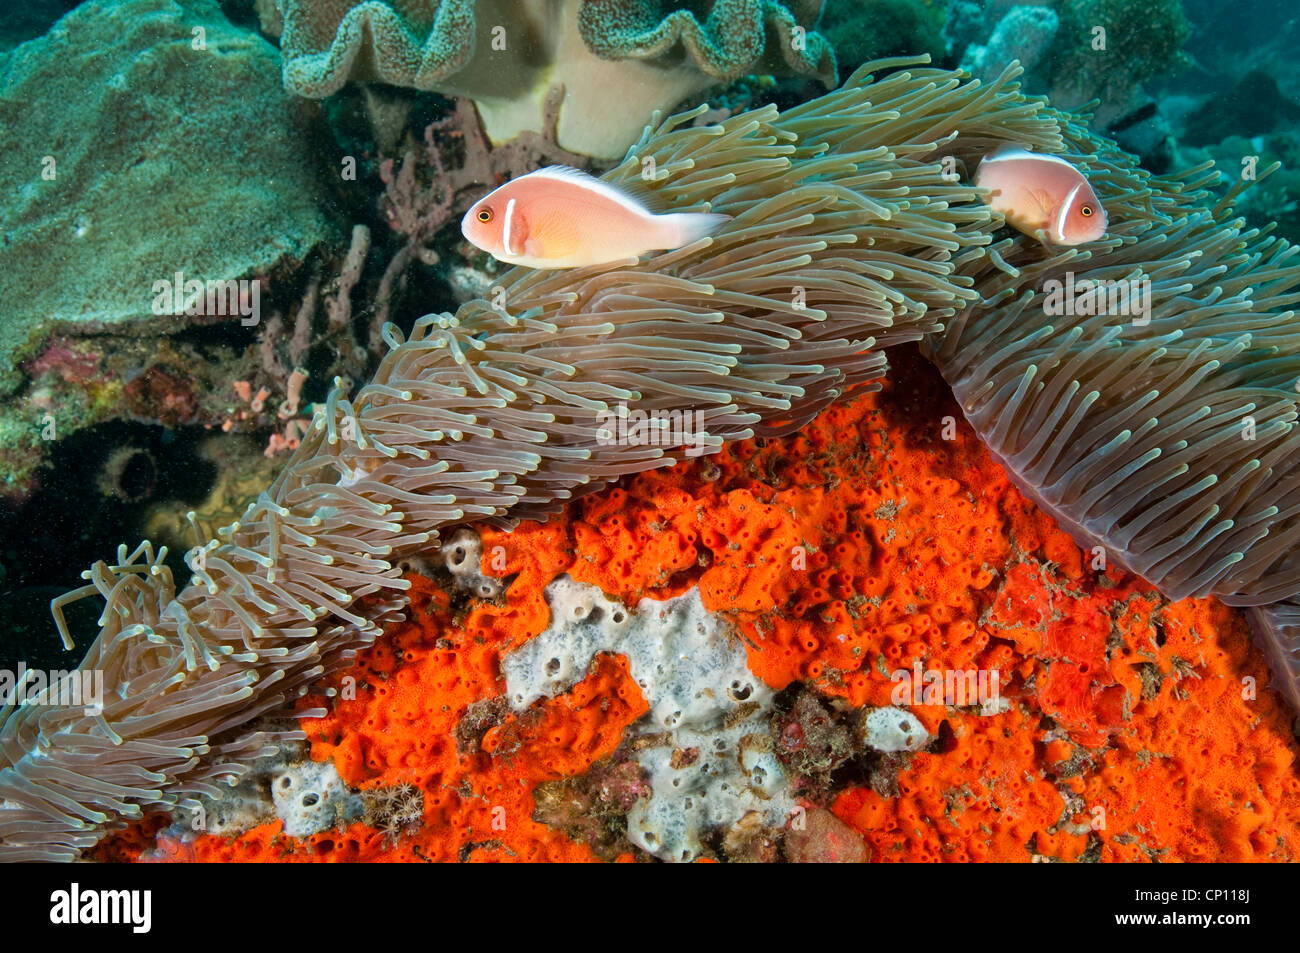 Rosa Amphiprion perideraion anemonefishes, Sulawesi, Indonesia Foto de stock